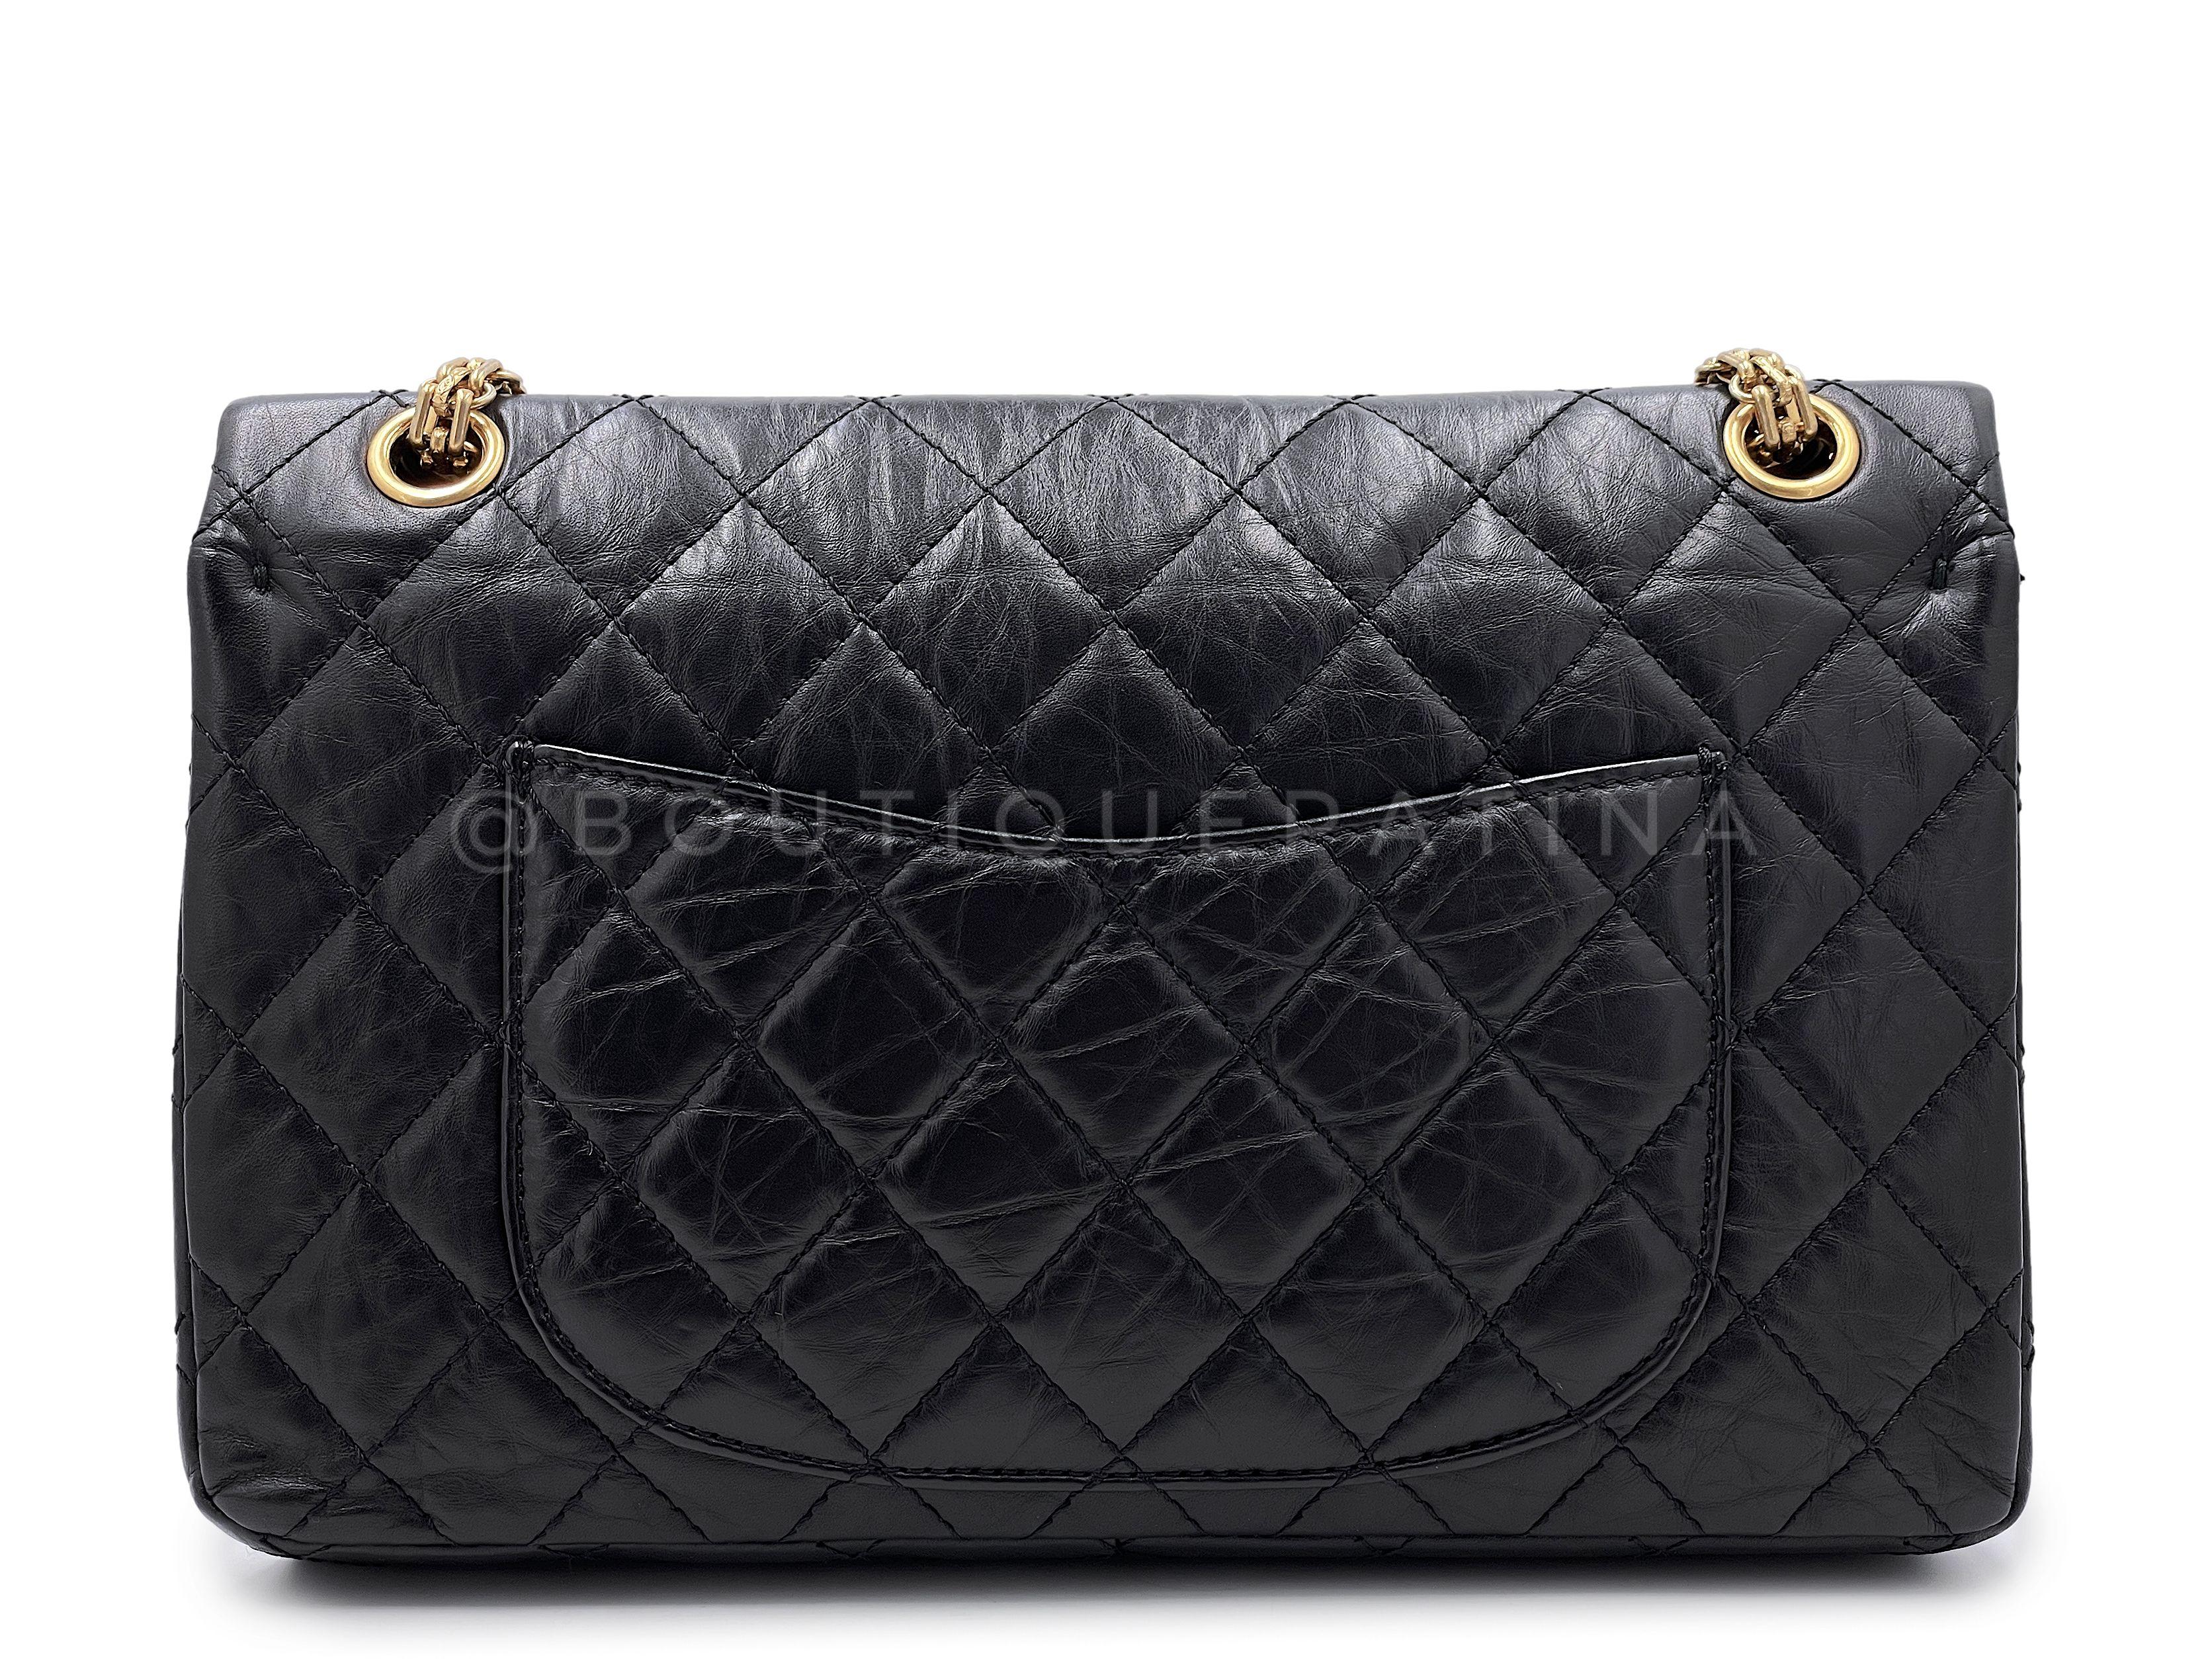 Chanel Black Aged Calfskin Reissue Medium 226 2.55 Flap Bag GHW 66864 For Sale 1